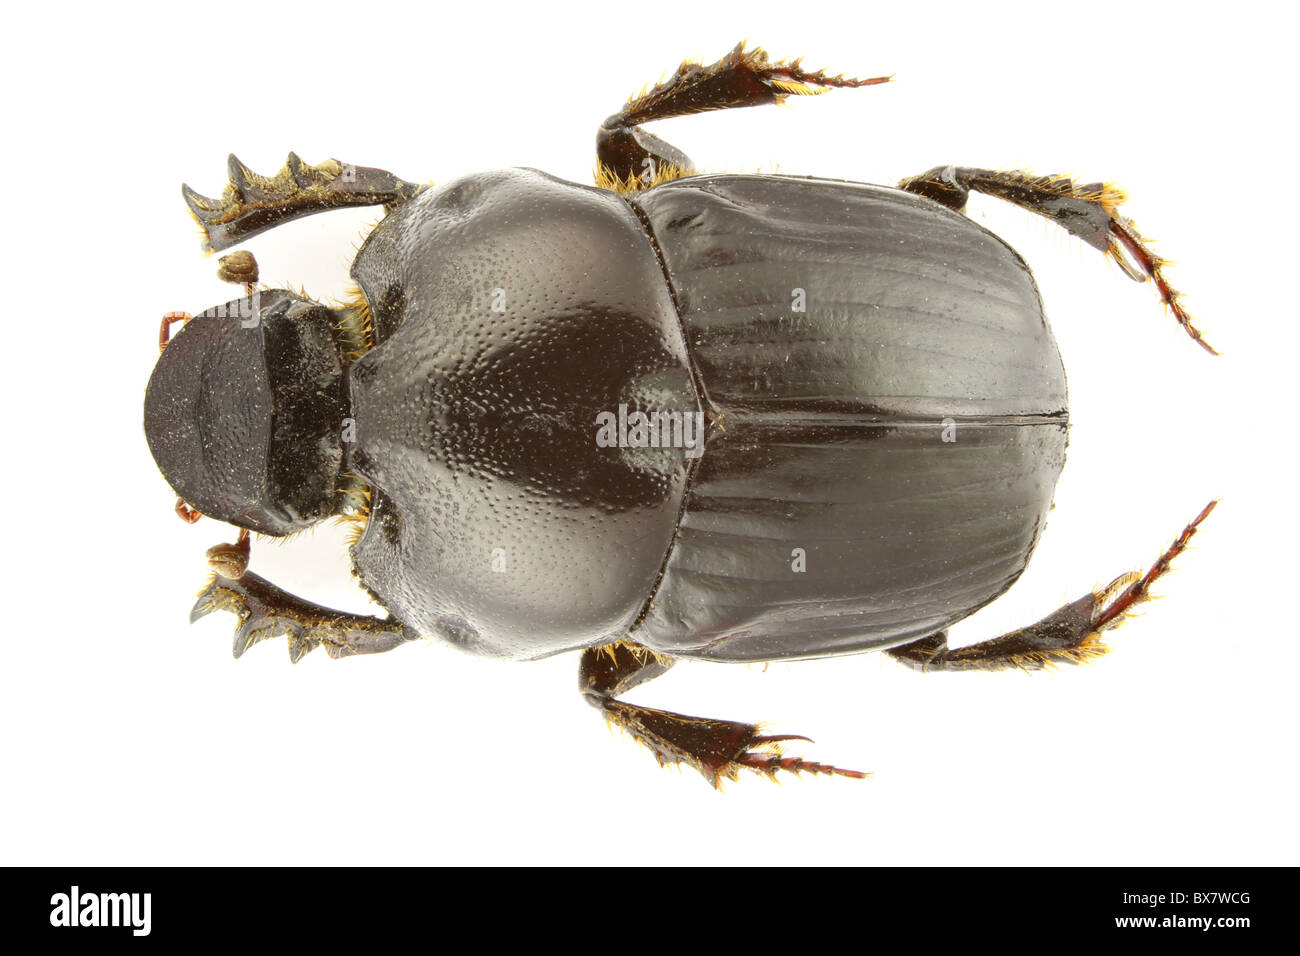 Bubas bubalus (dung beetle) isolato su uno sfondo bianco. Foto Stock